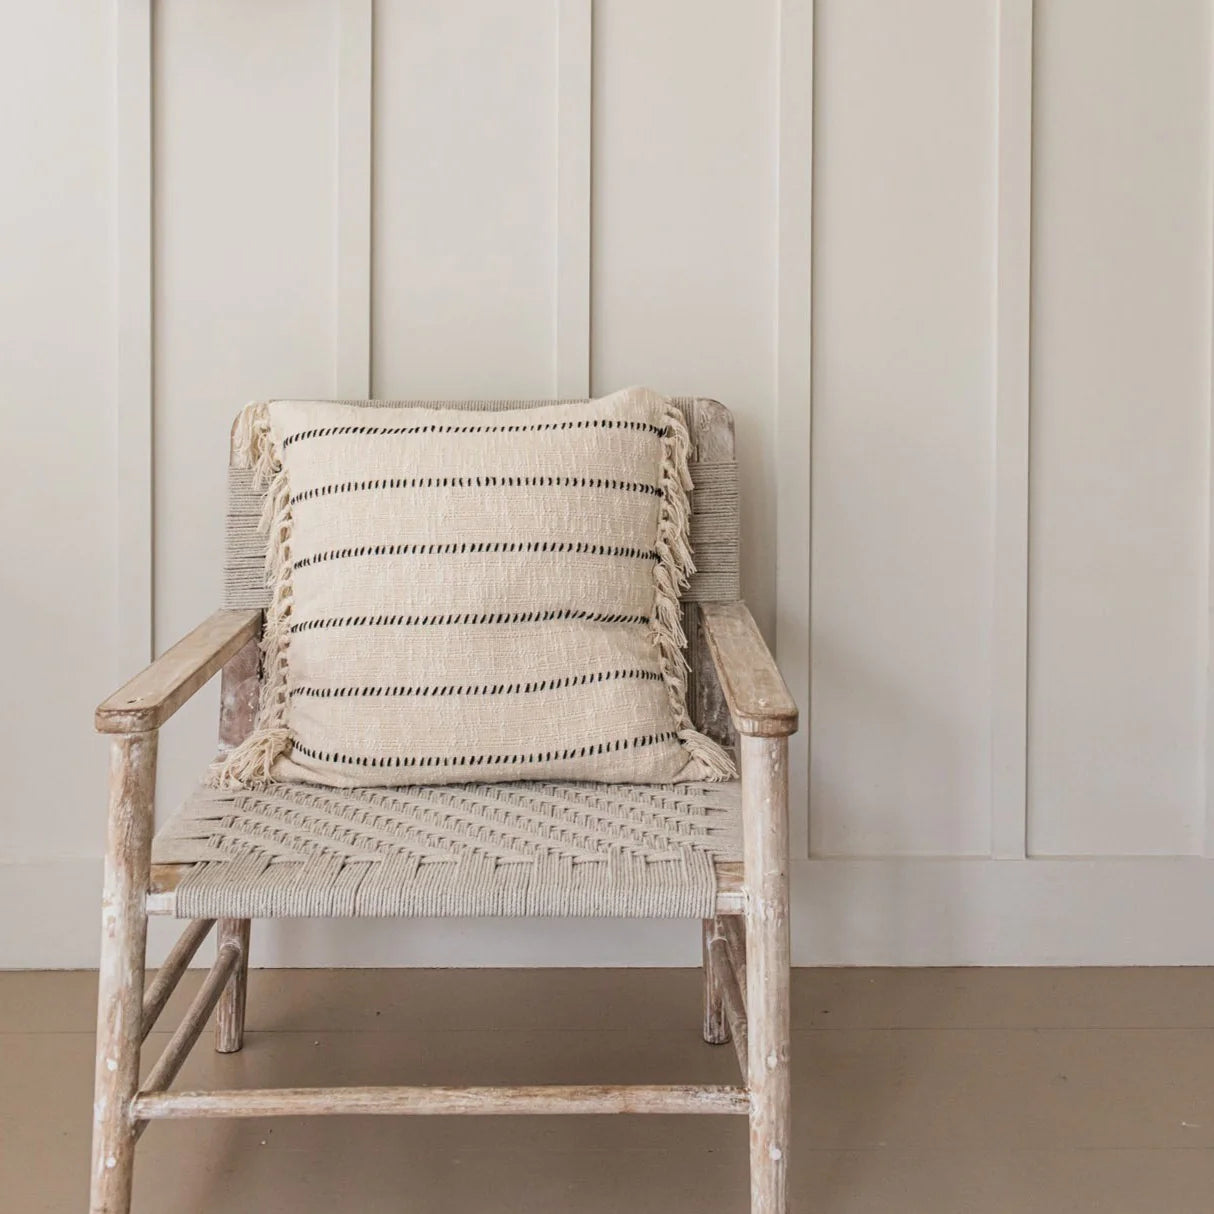 Striped neutral cushion sits on a woven armchair against a cream panelled wall.